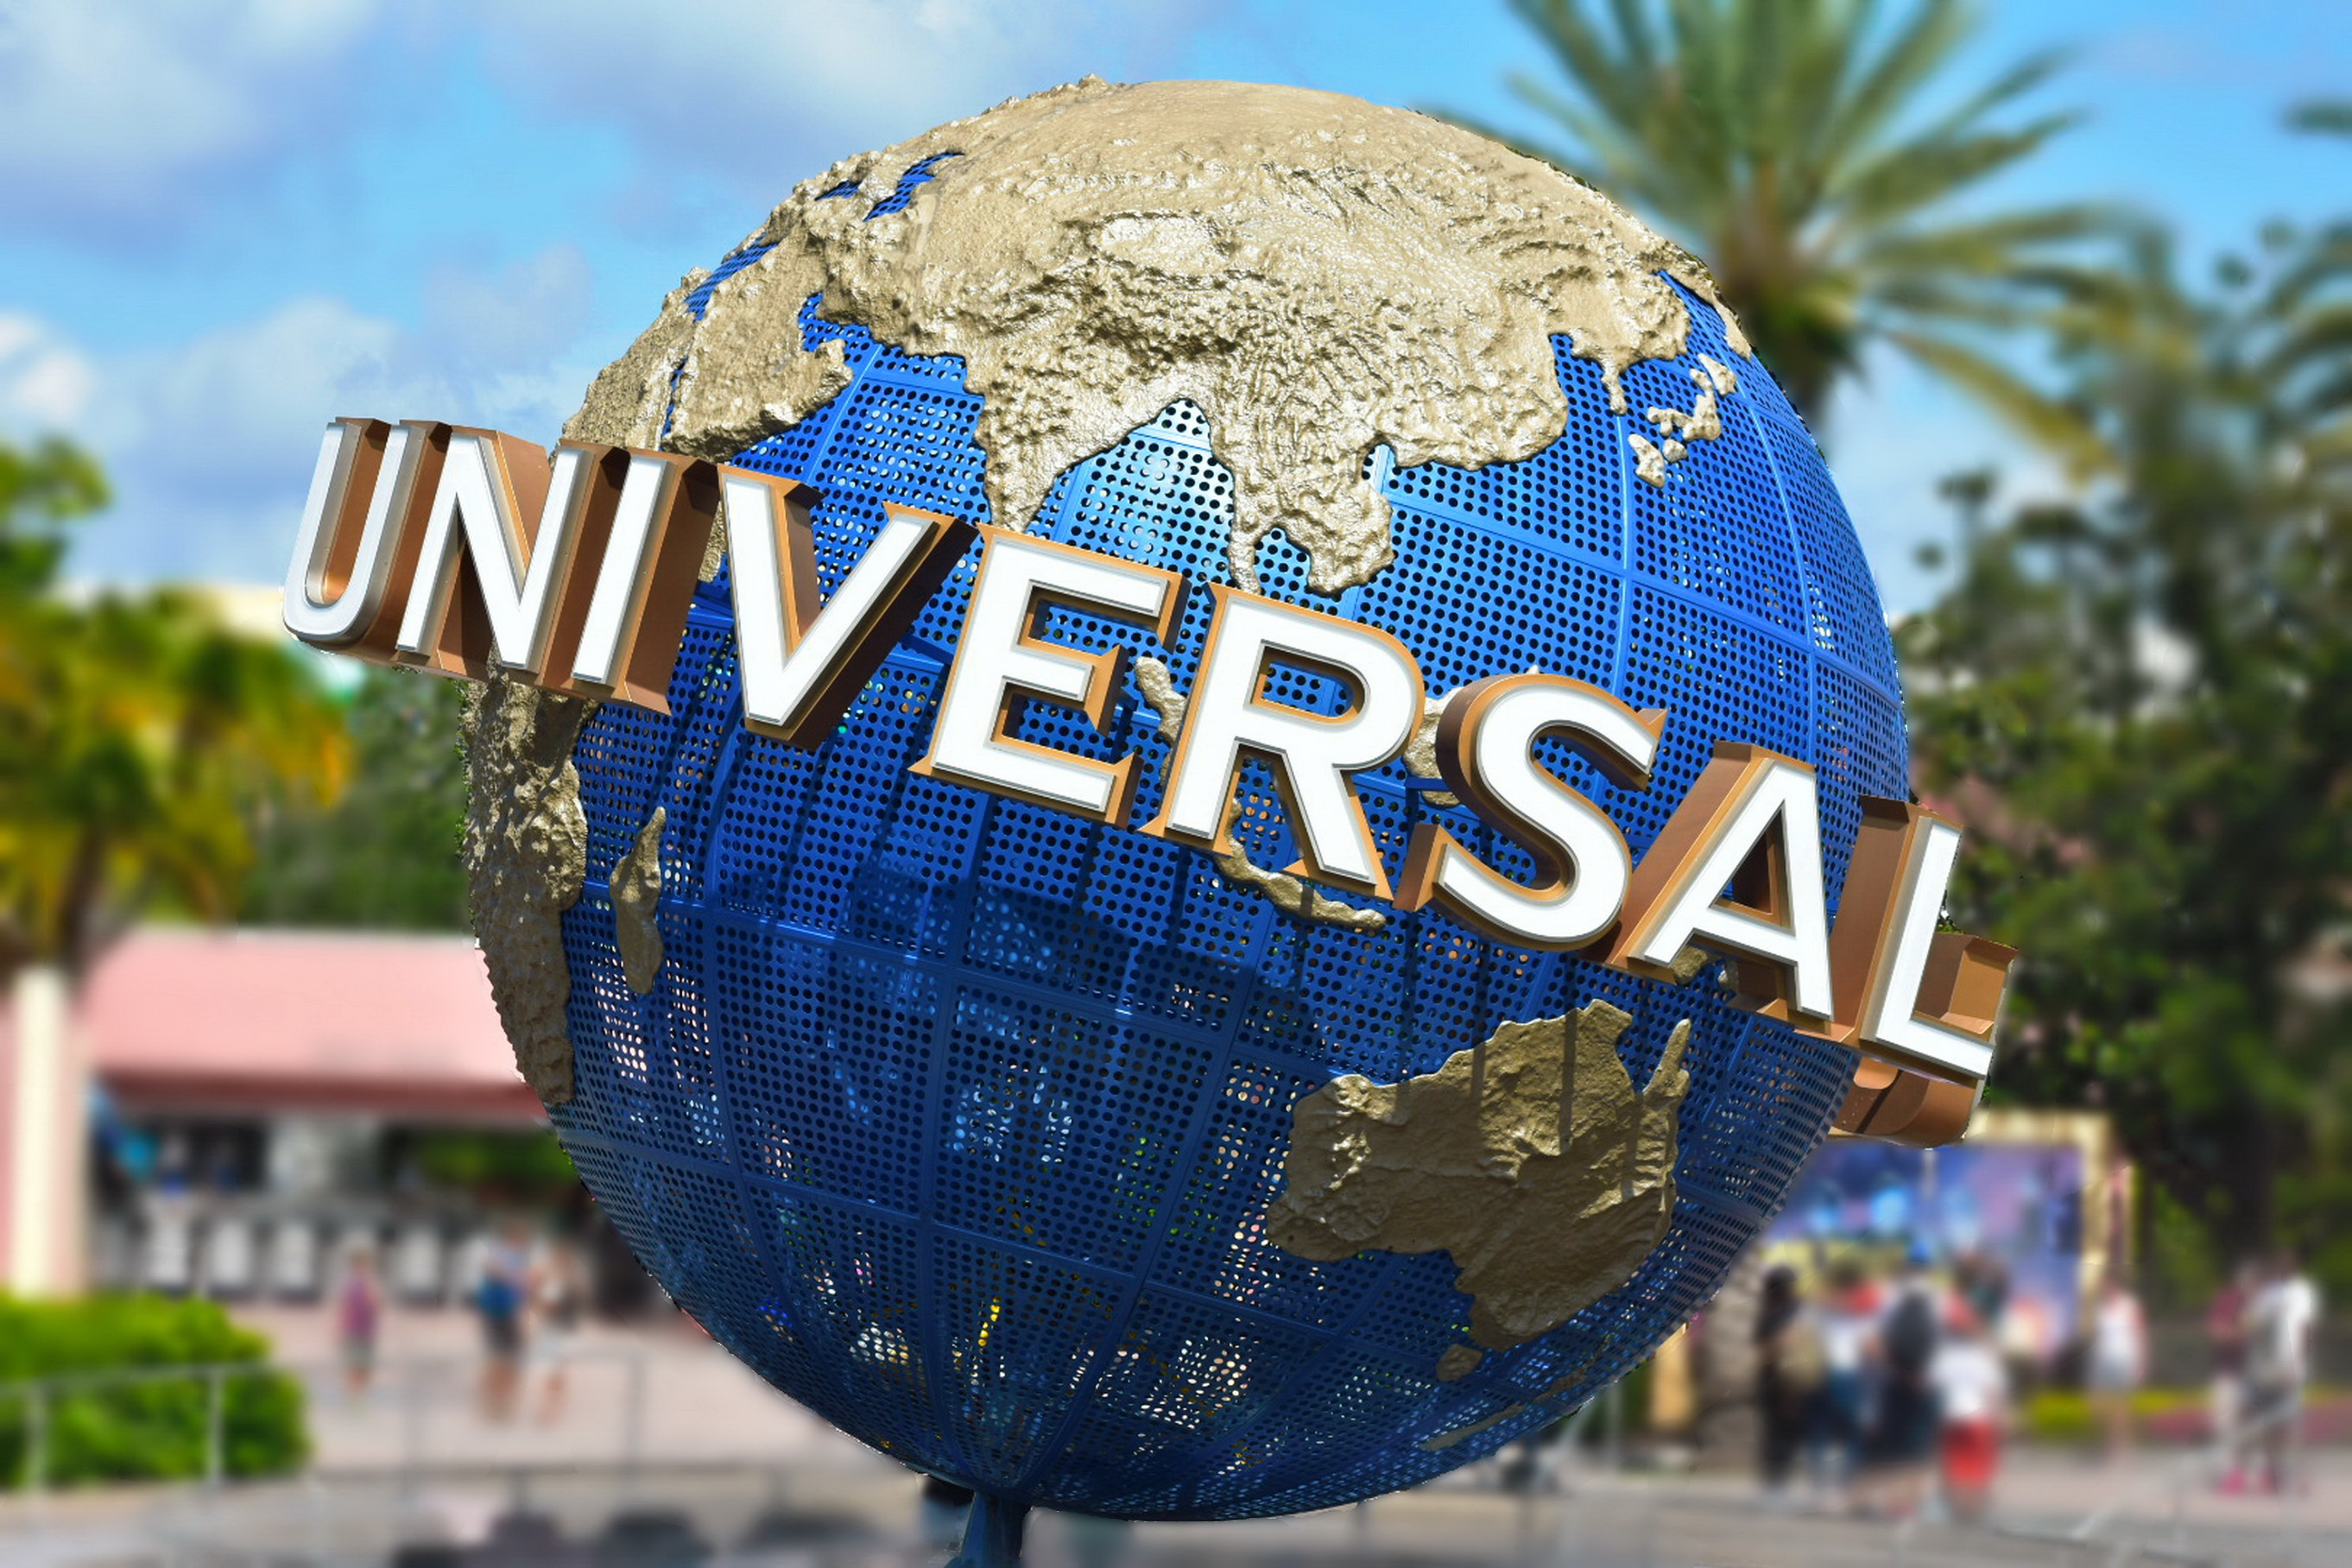 The famous Universal Globe at Citiwalk Universal Studios in Orlando, FL.